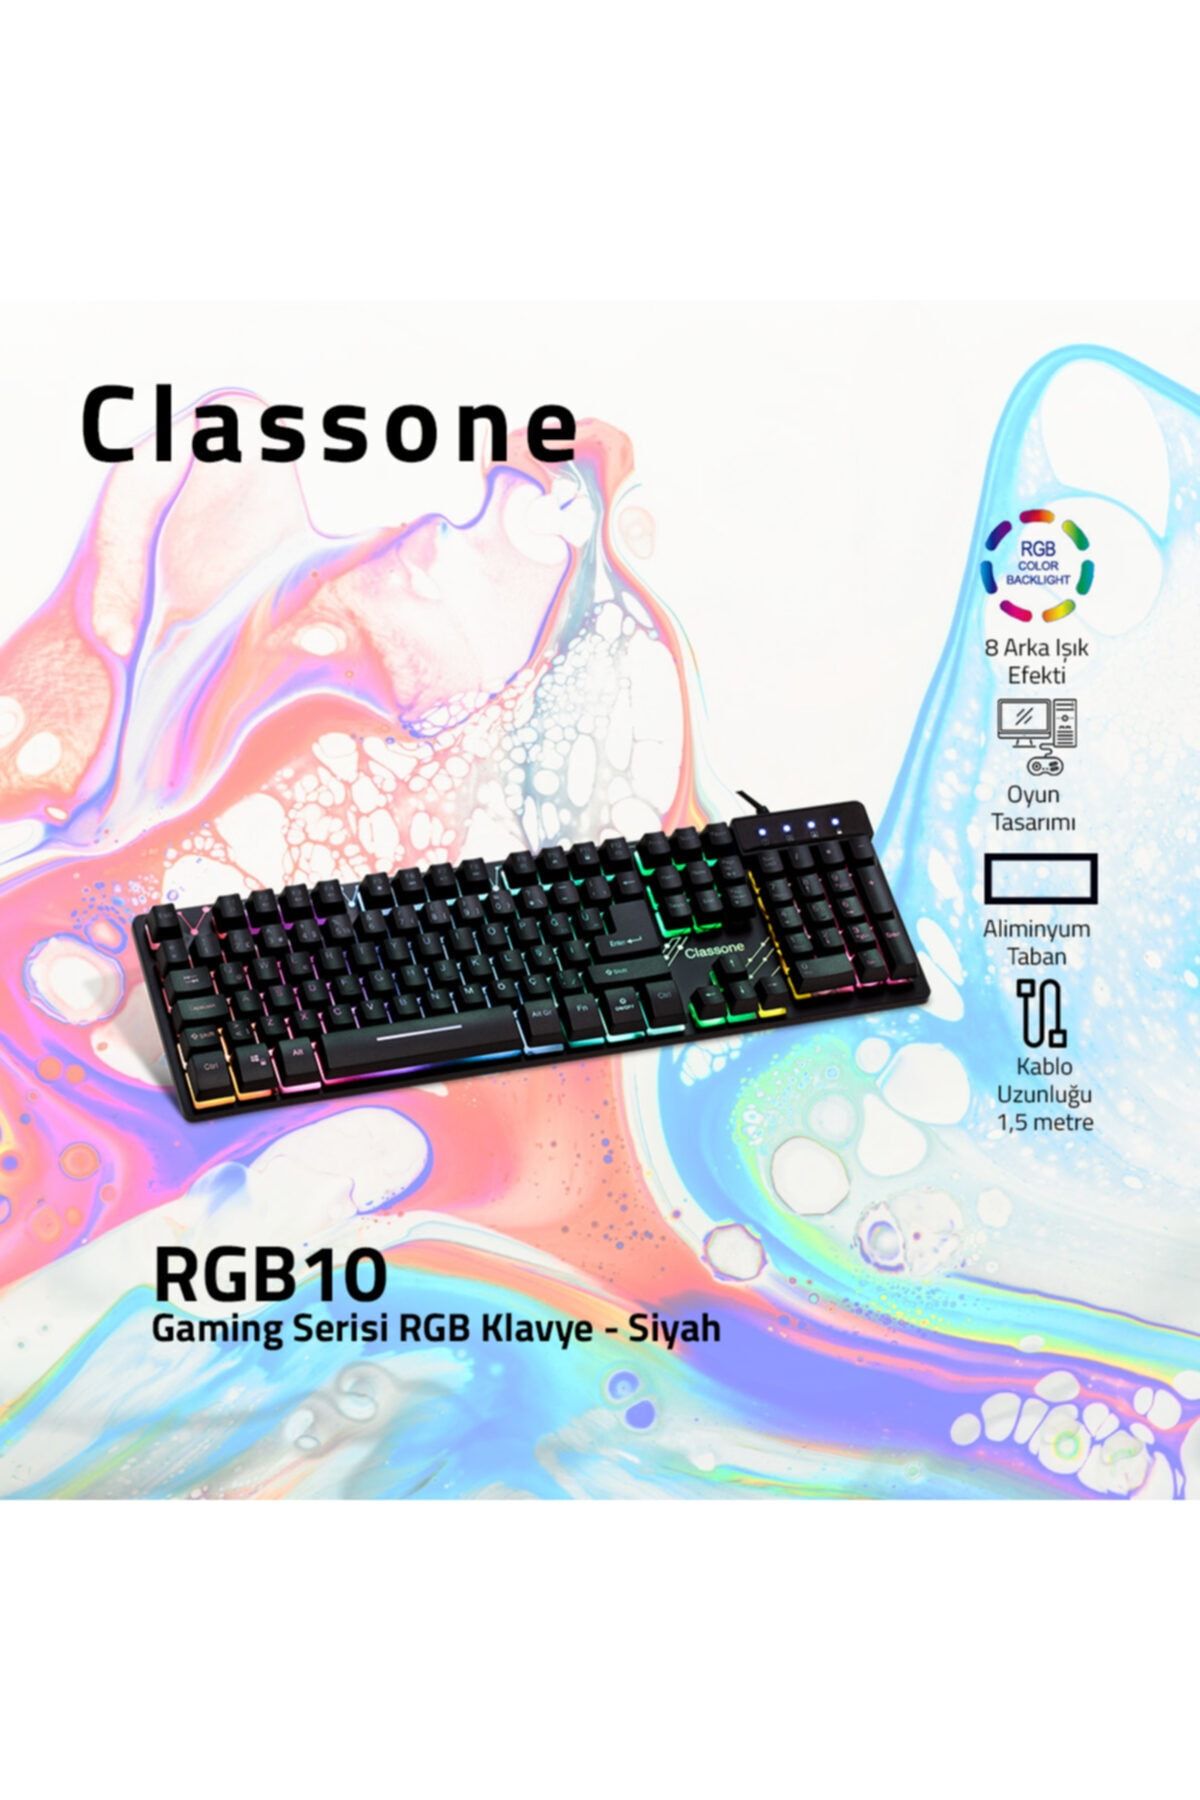 Classone Rgb10 Rgb Serisi Gamıng Klavye